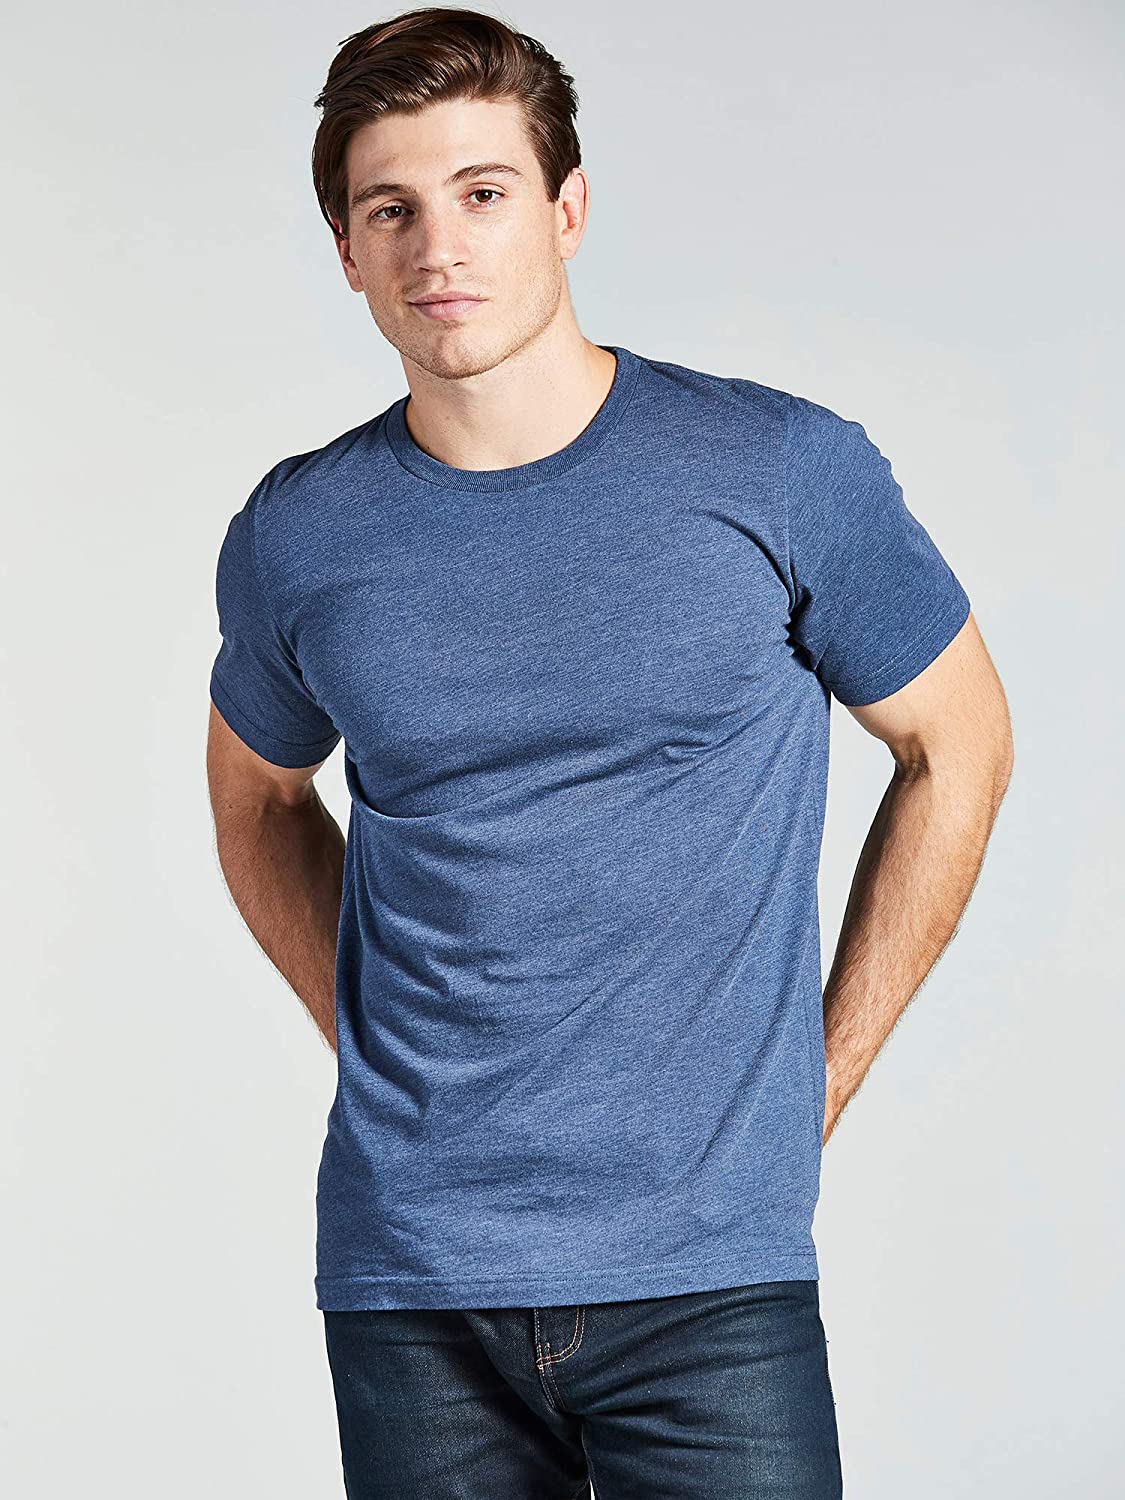 Bolter 4 Pack Men's Everyday Cotton Blend Short Sleeve T-Shirt | eBay